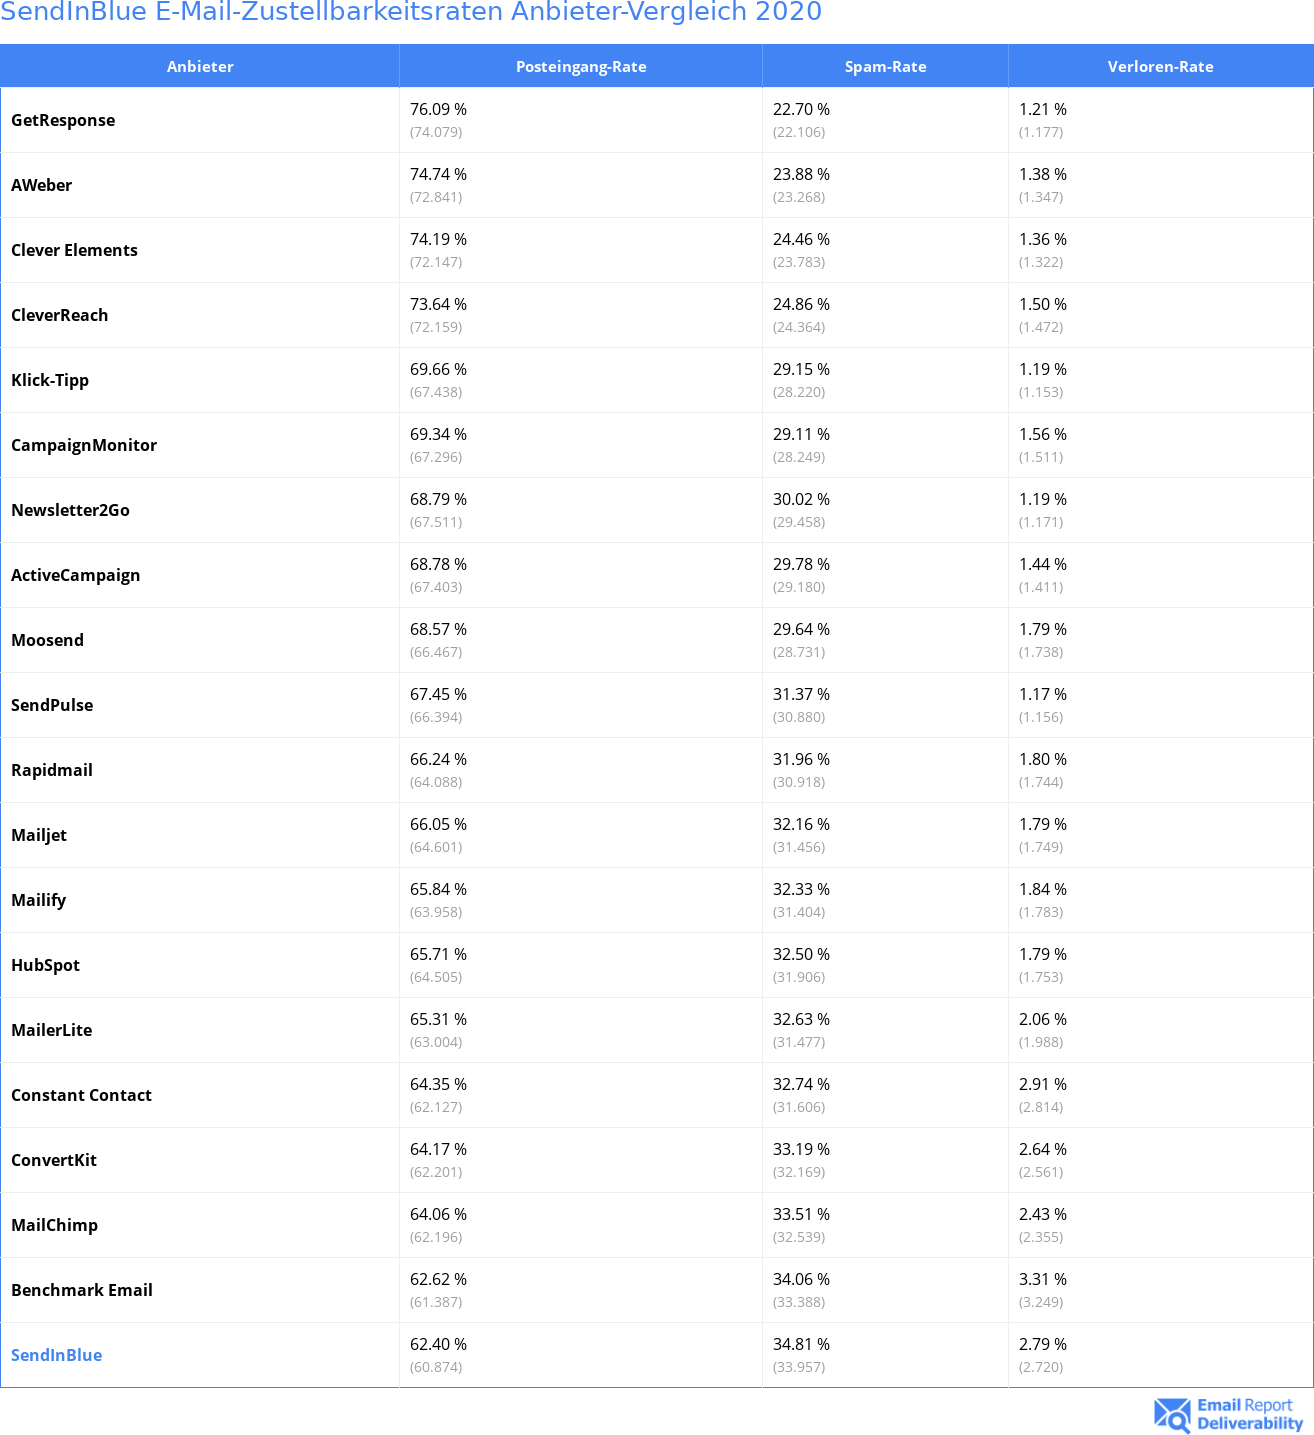 SendInBlue E-Mail-Zustellbarkeitsraten Anbieter-Vergleich 2020